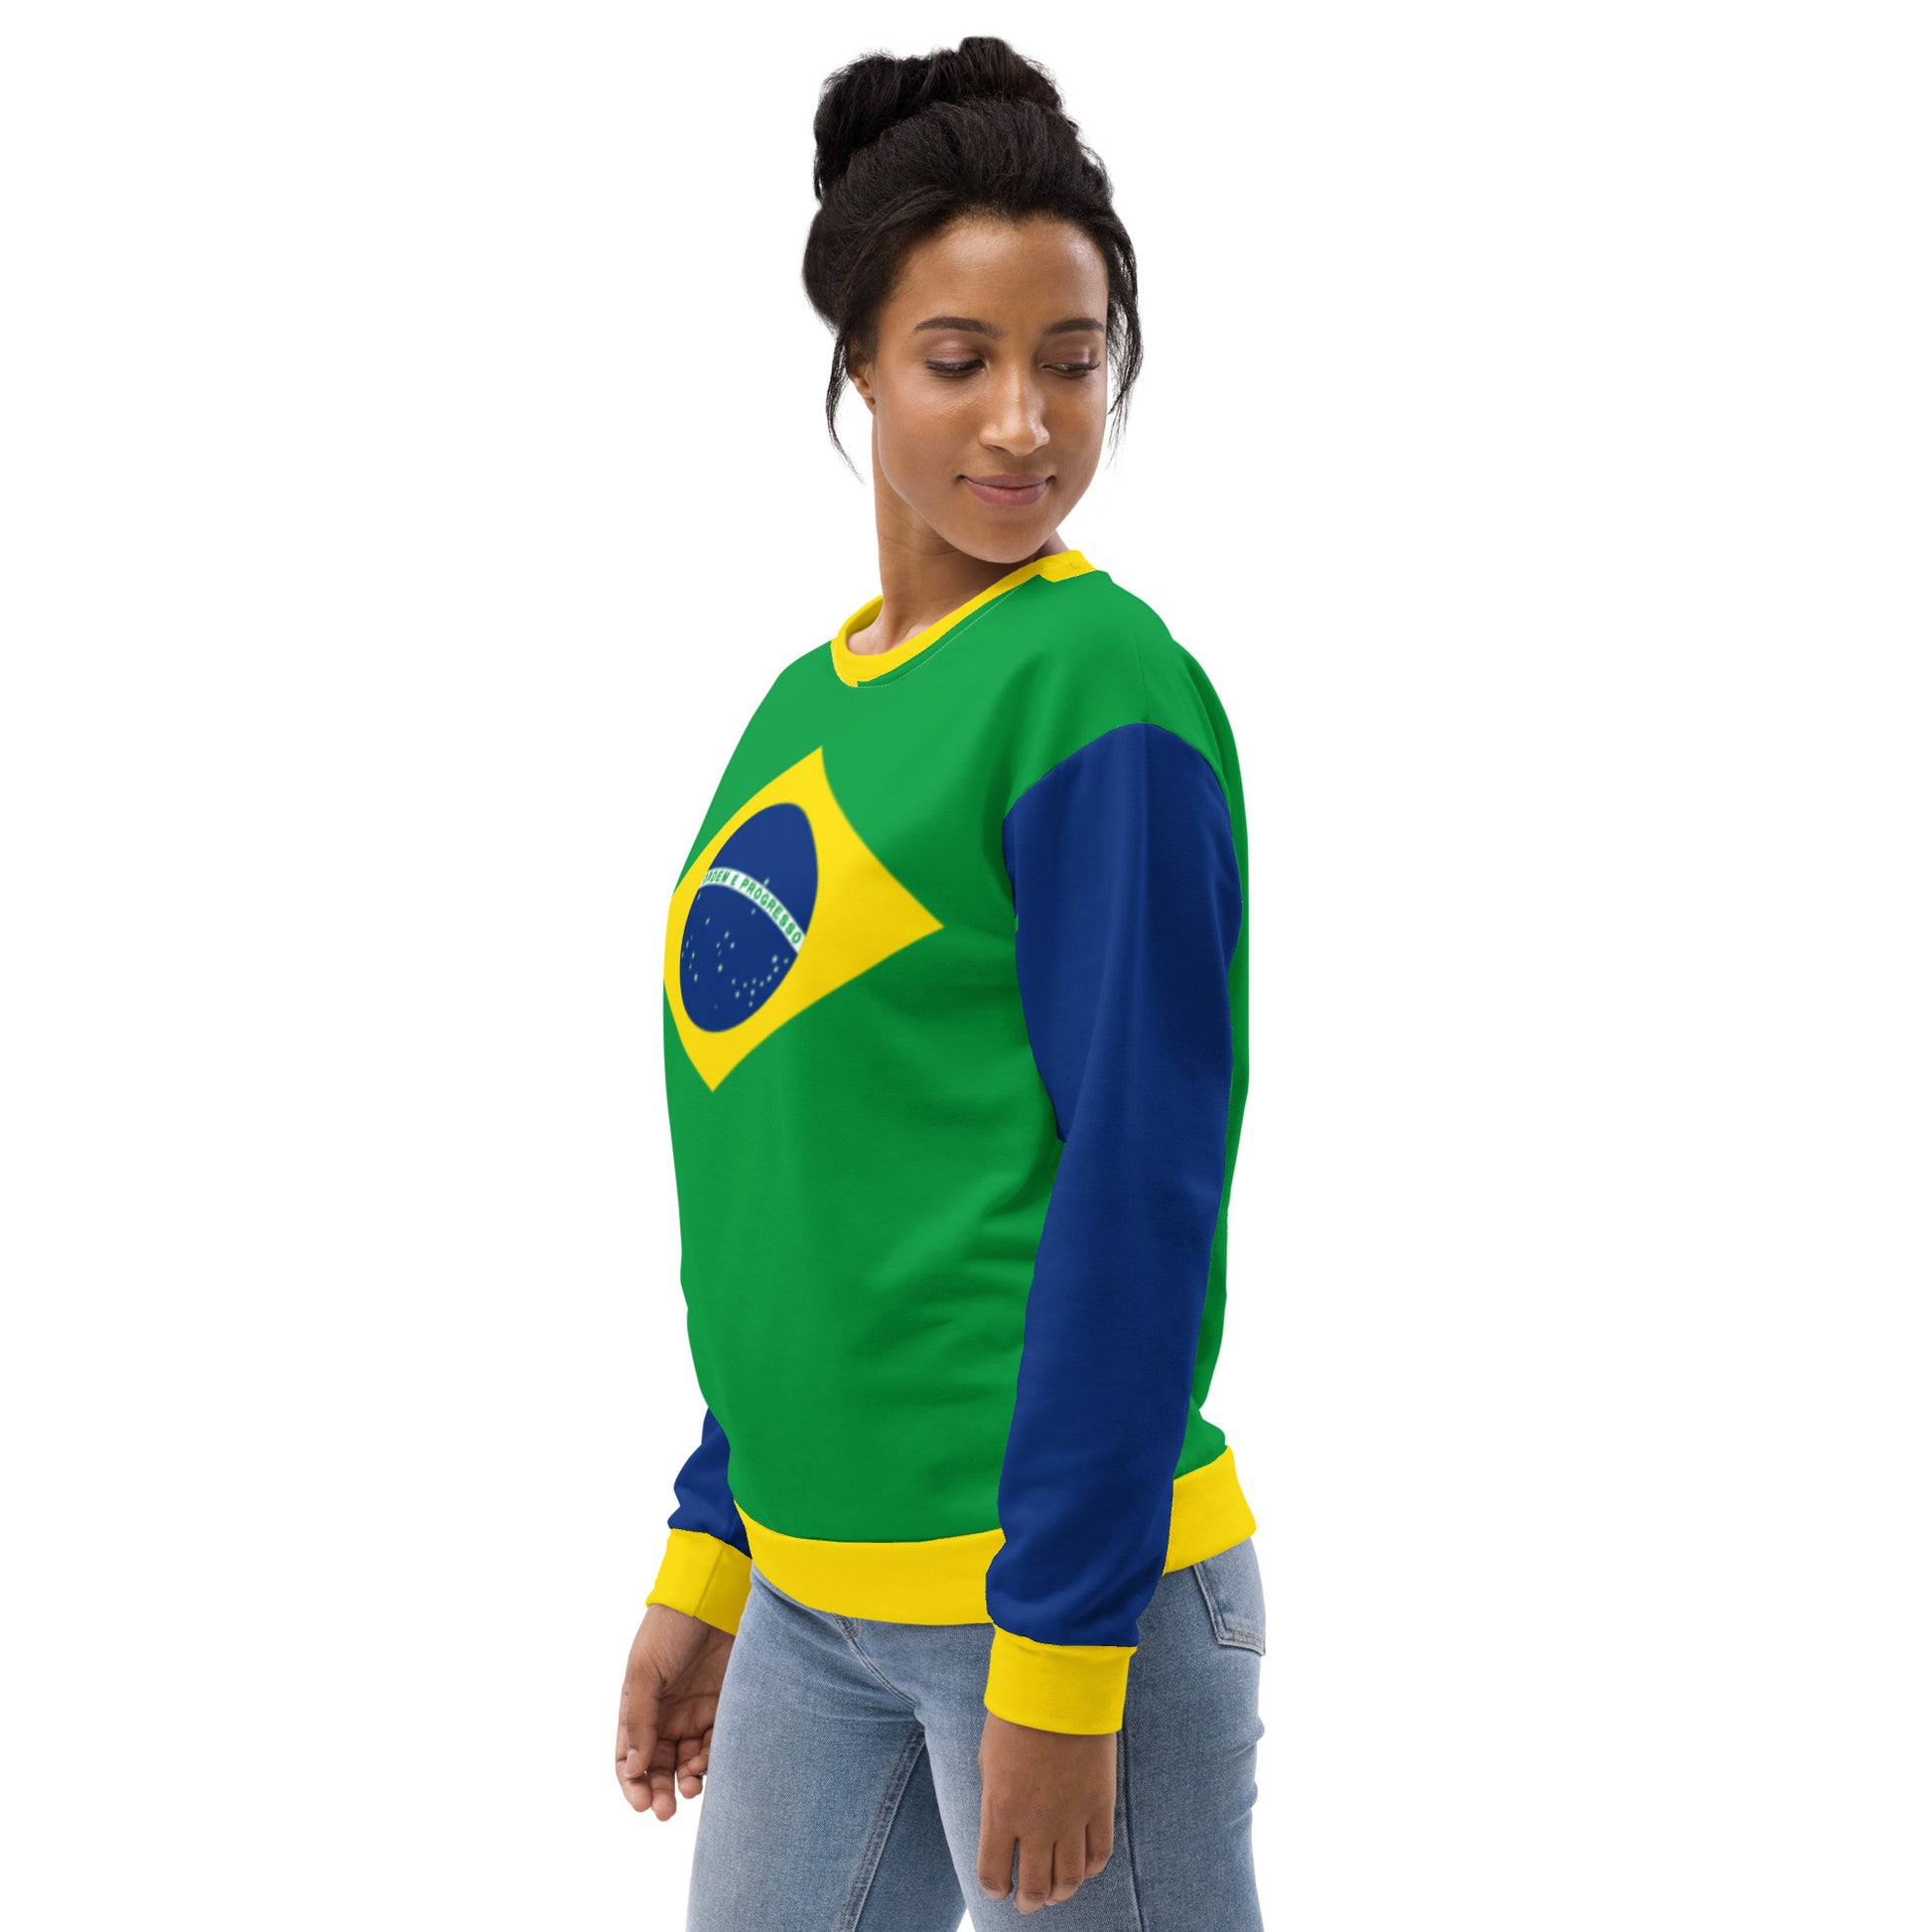 Brazil Sweatshirt / Brazil Clothes Style / Brazilian Flag Color